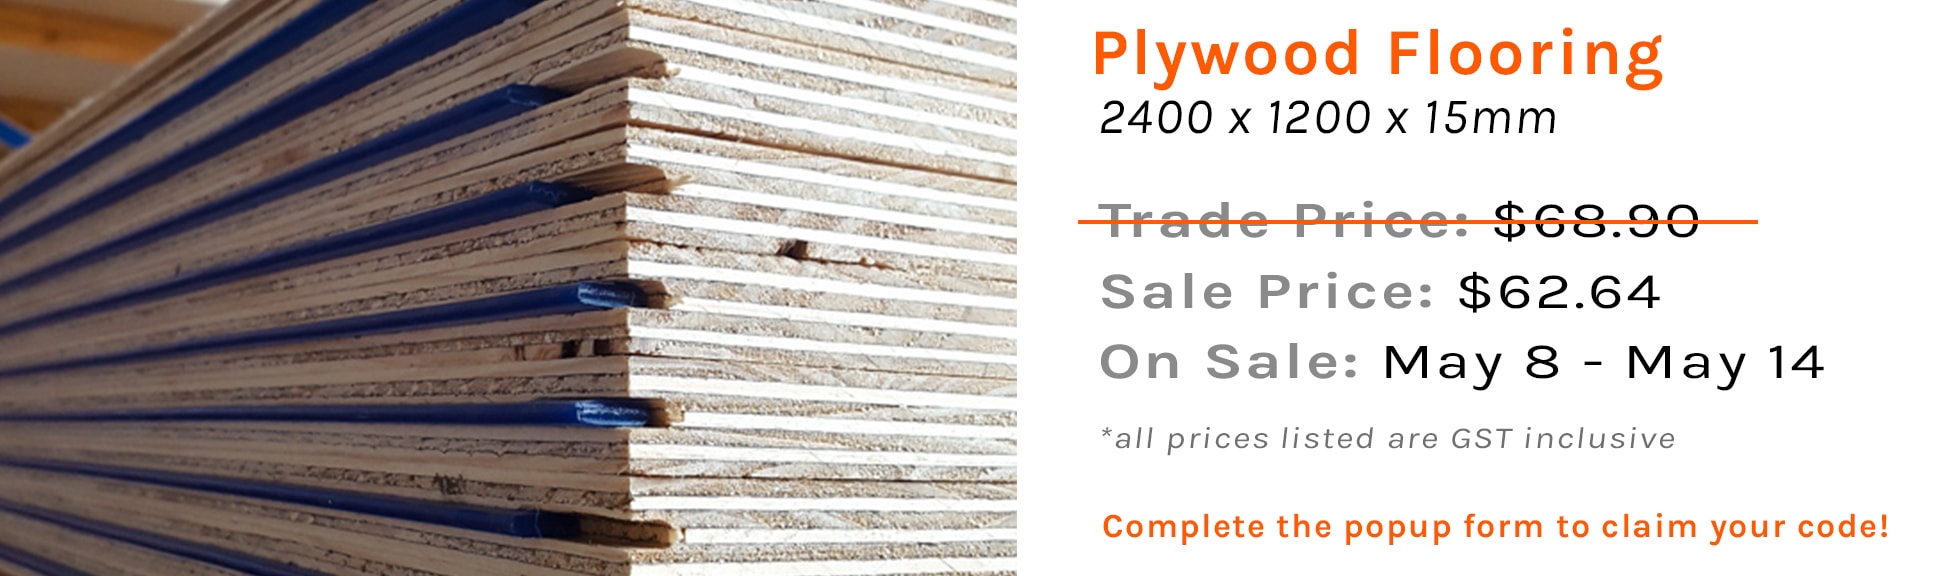 plyco-plywood-flooring-blog-image